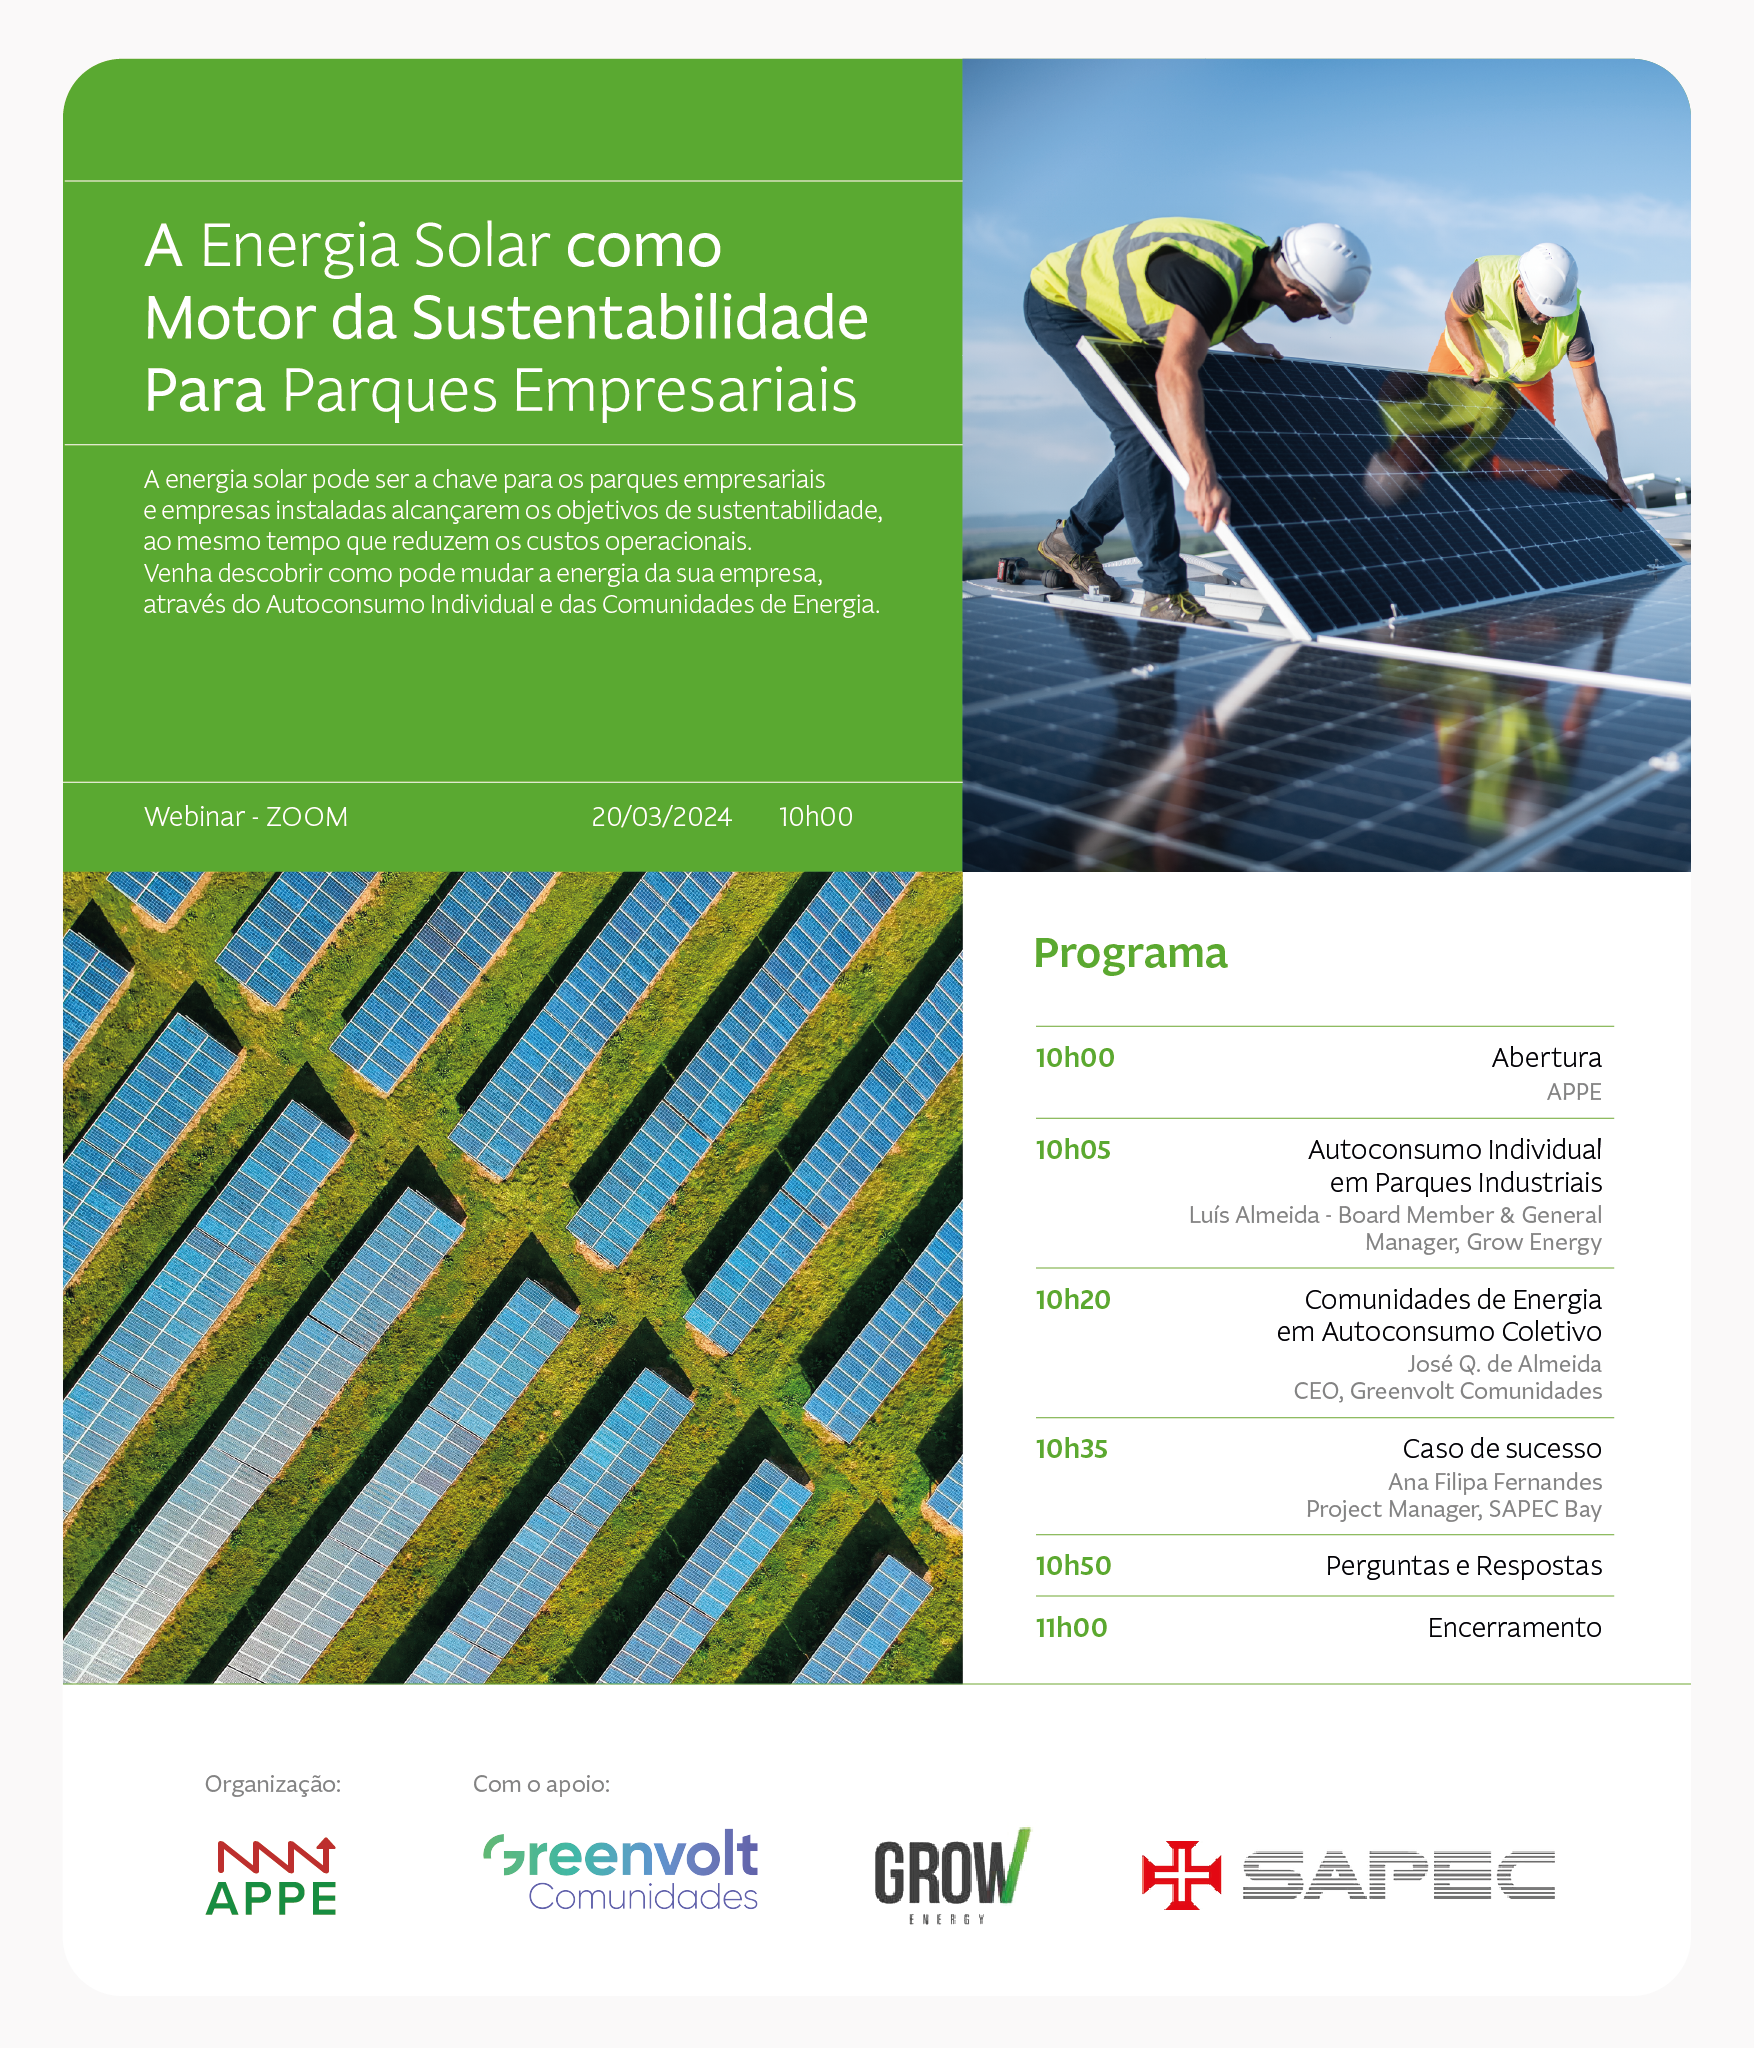 A Energia Solar como Motor de Sustentabilidade para Parques Empresariais